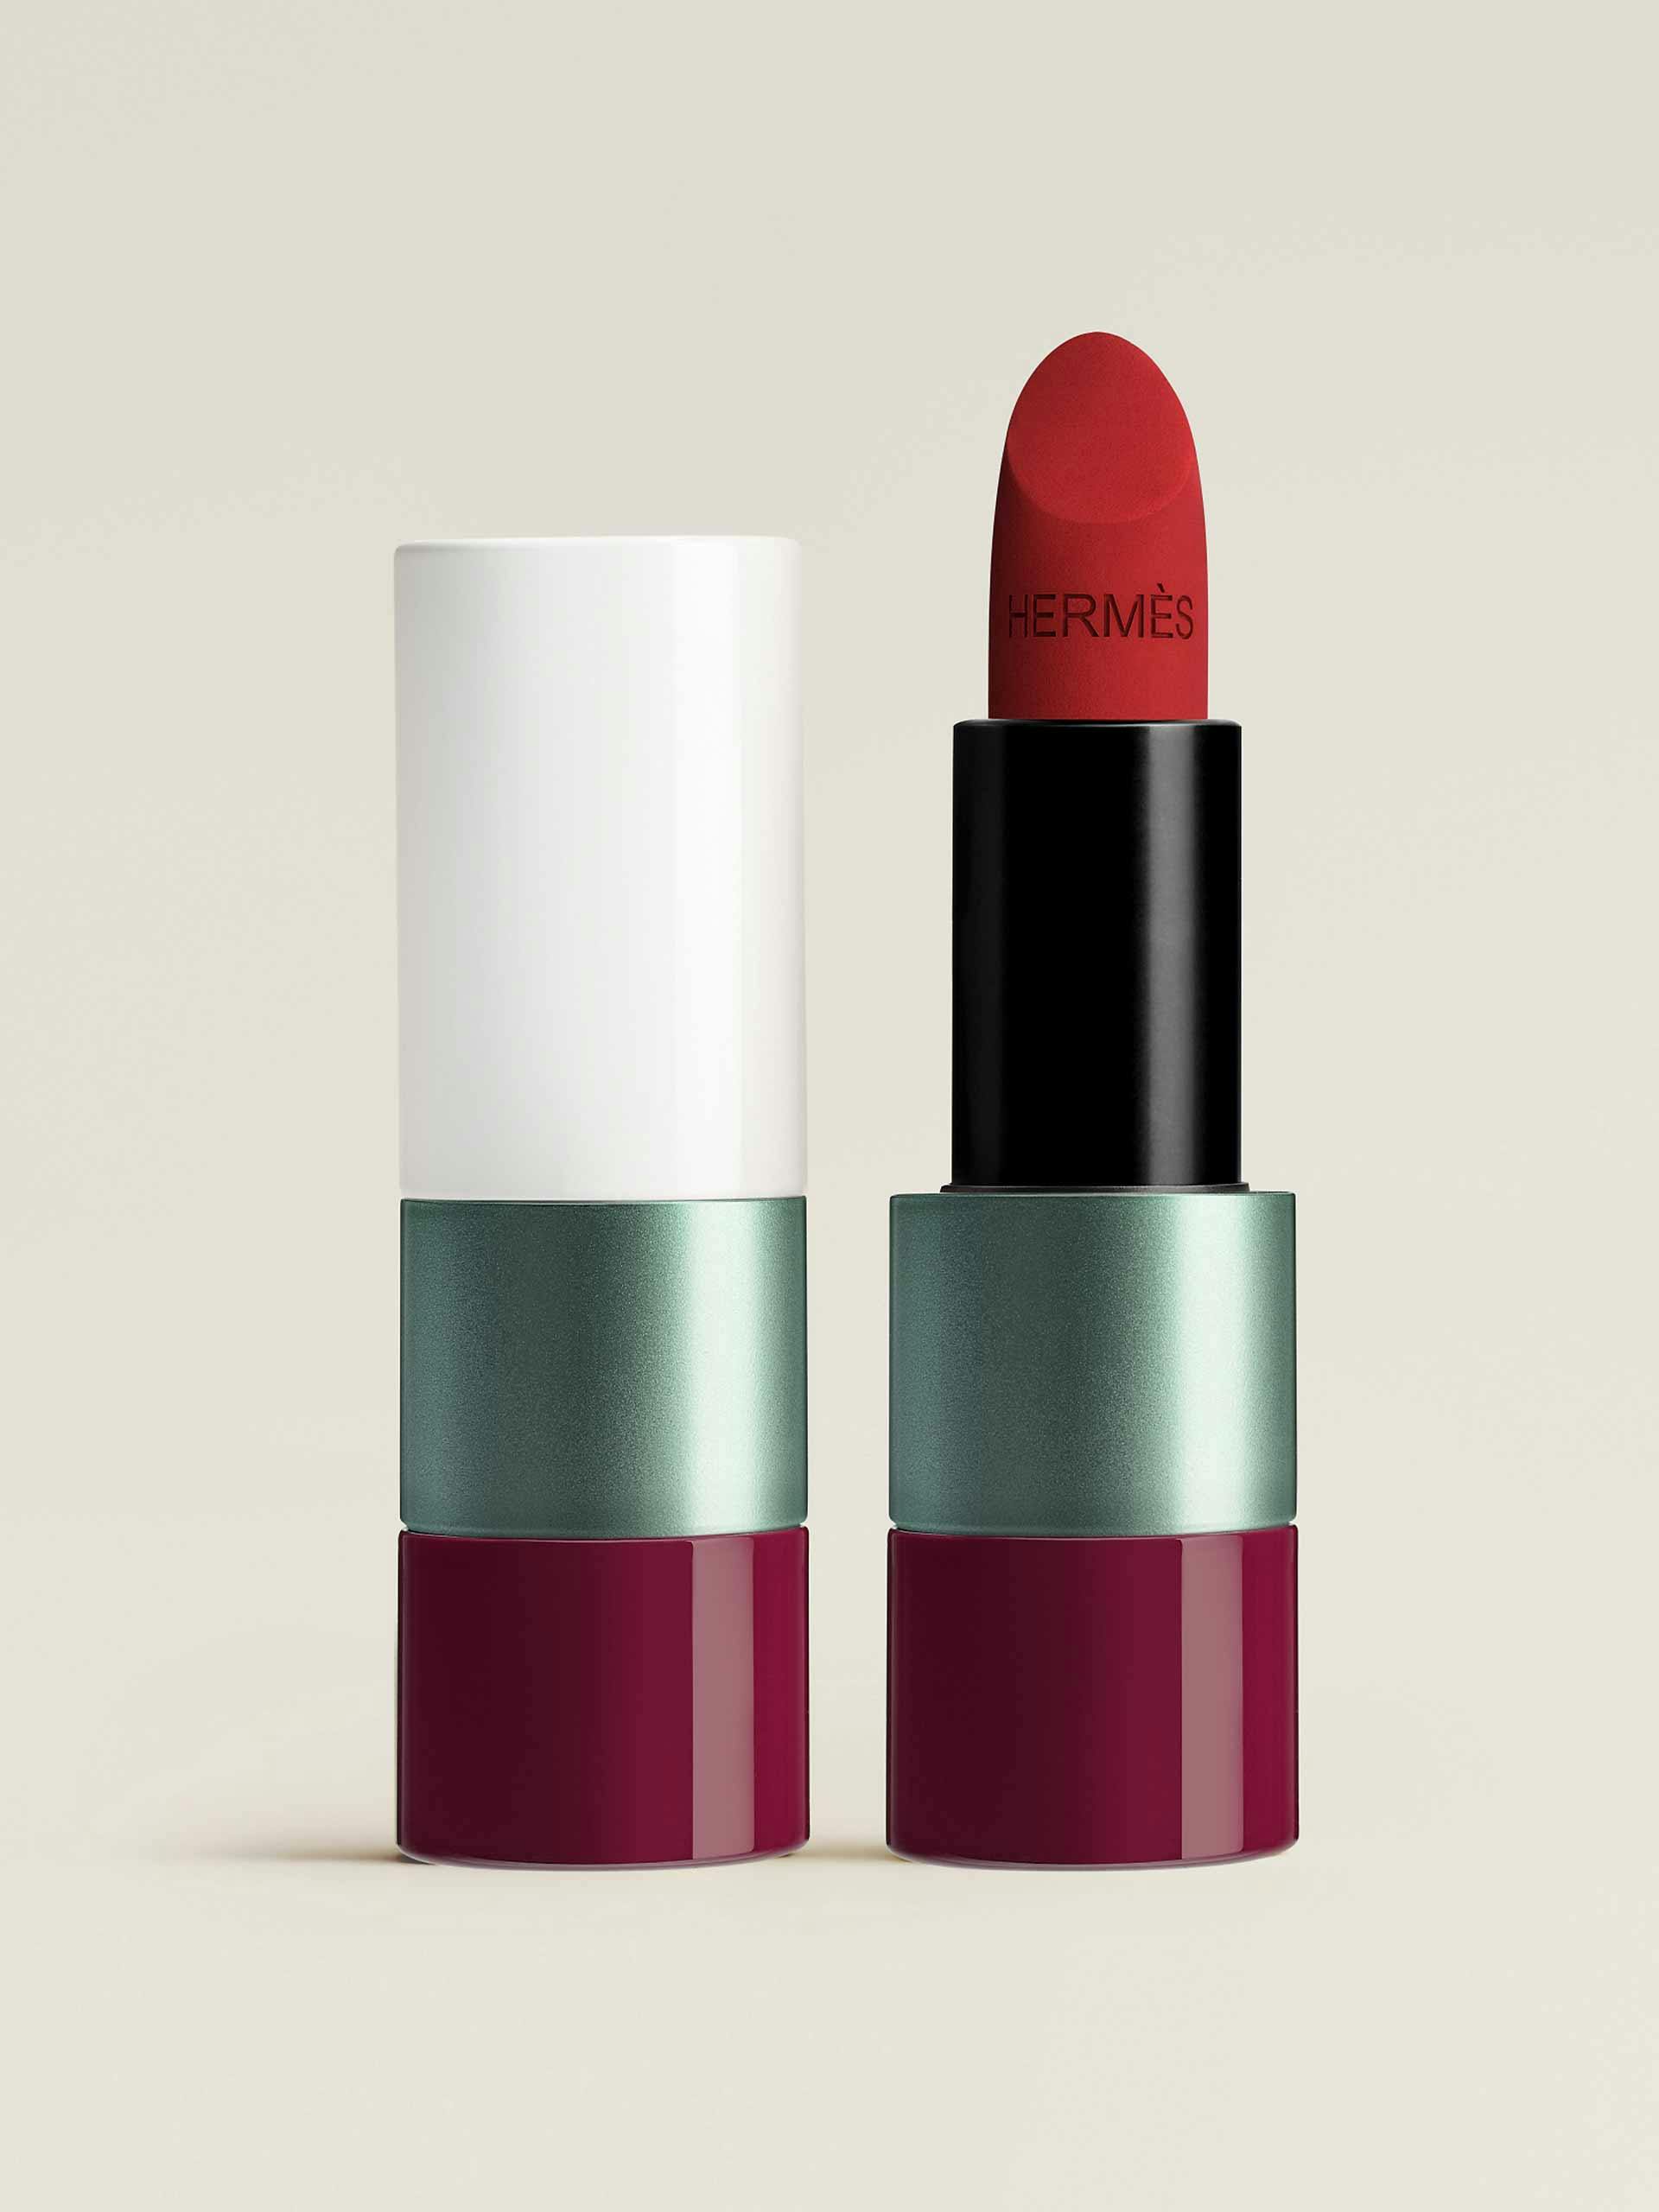 Rouge Hermès limited edition lipstick